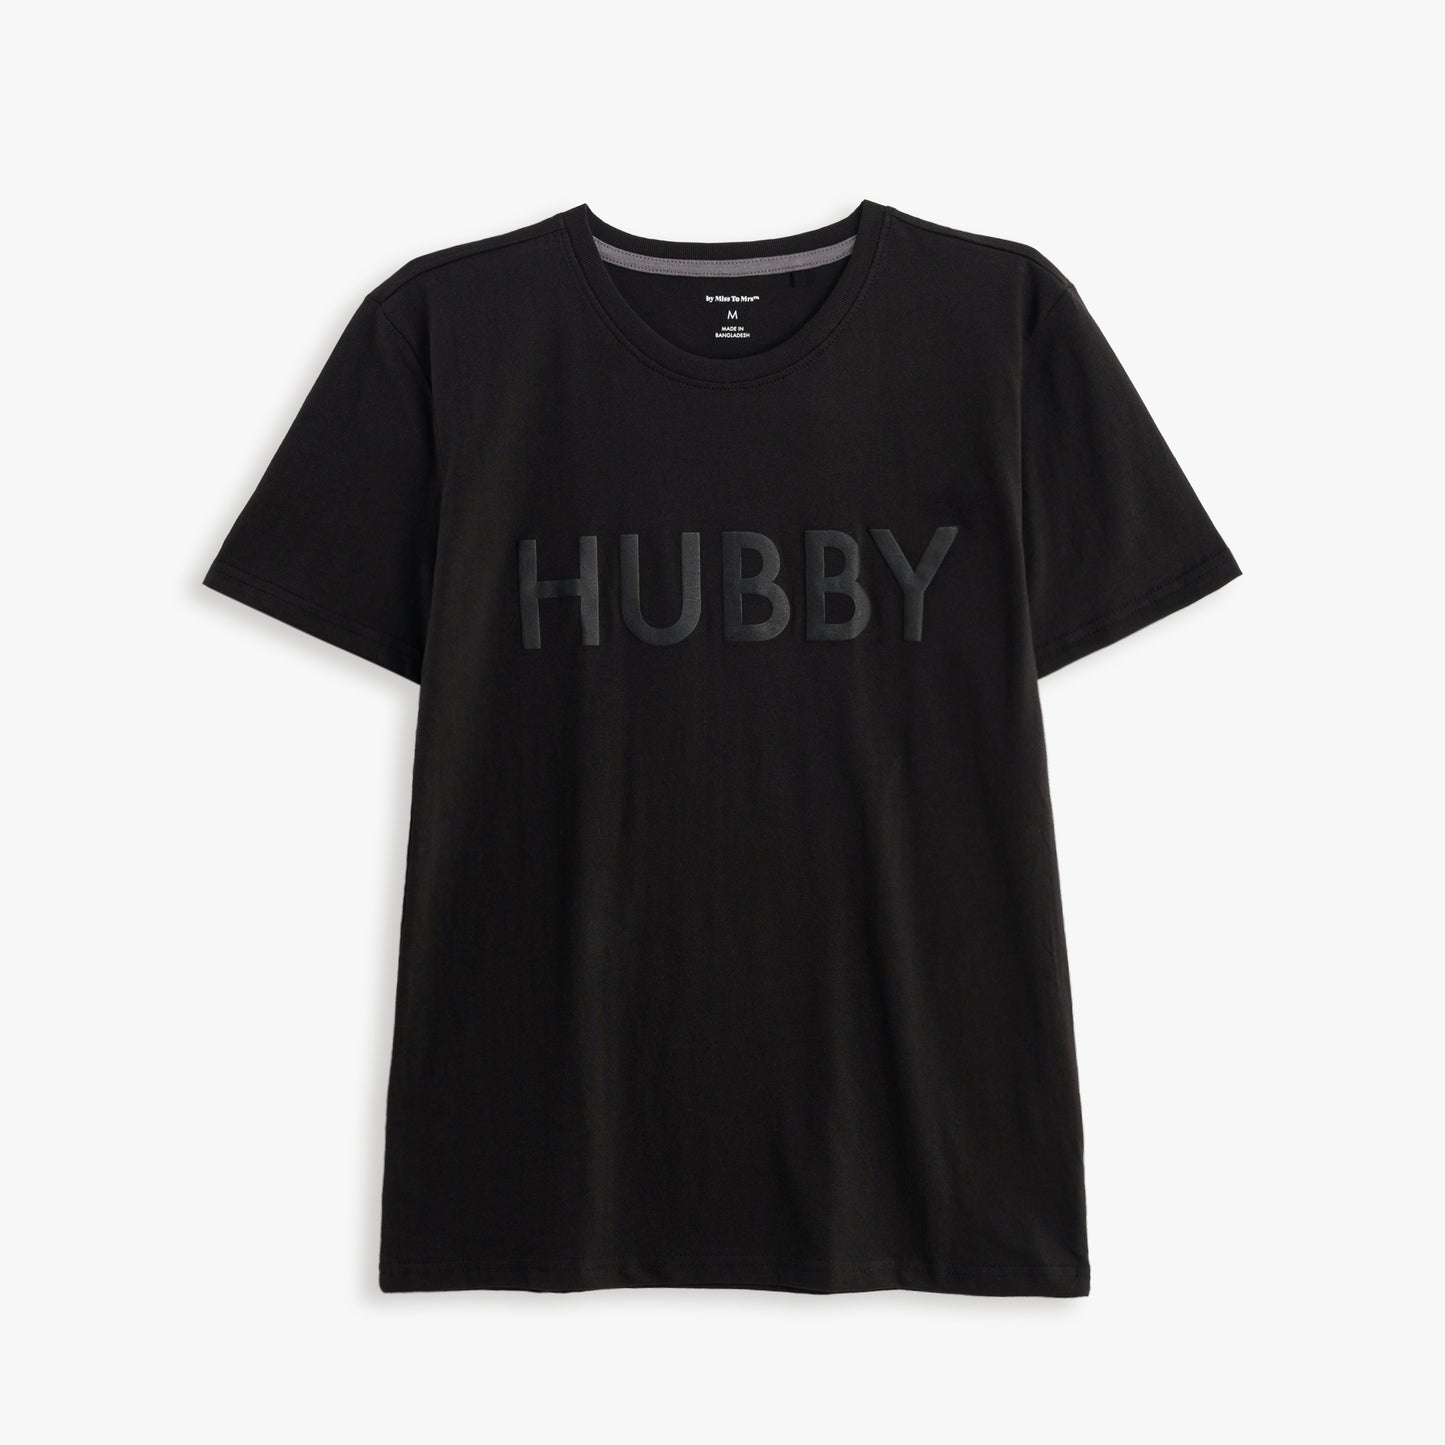 Hubby Puff Print T-shirt. Crewneck black t-shirt made of high-quality 100% cotton.